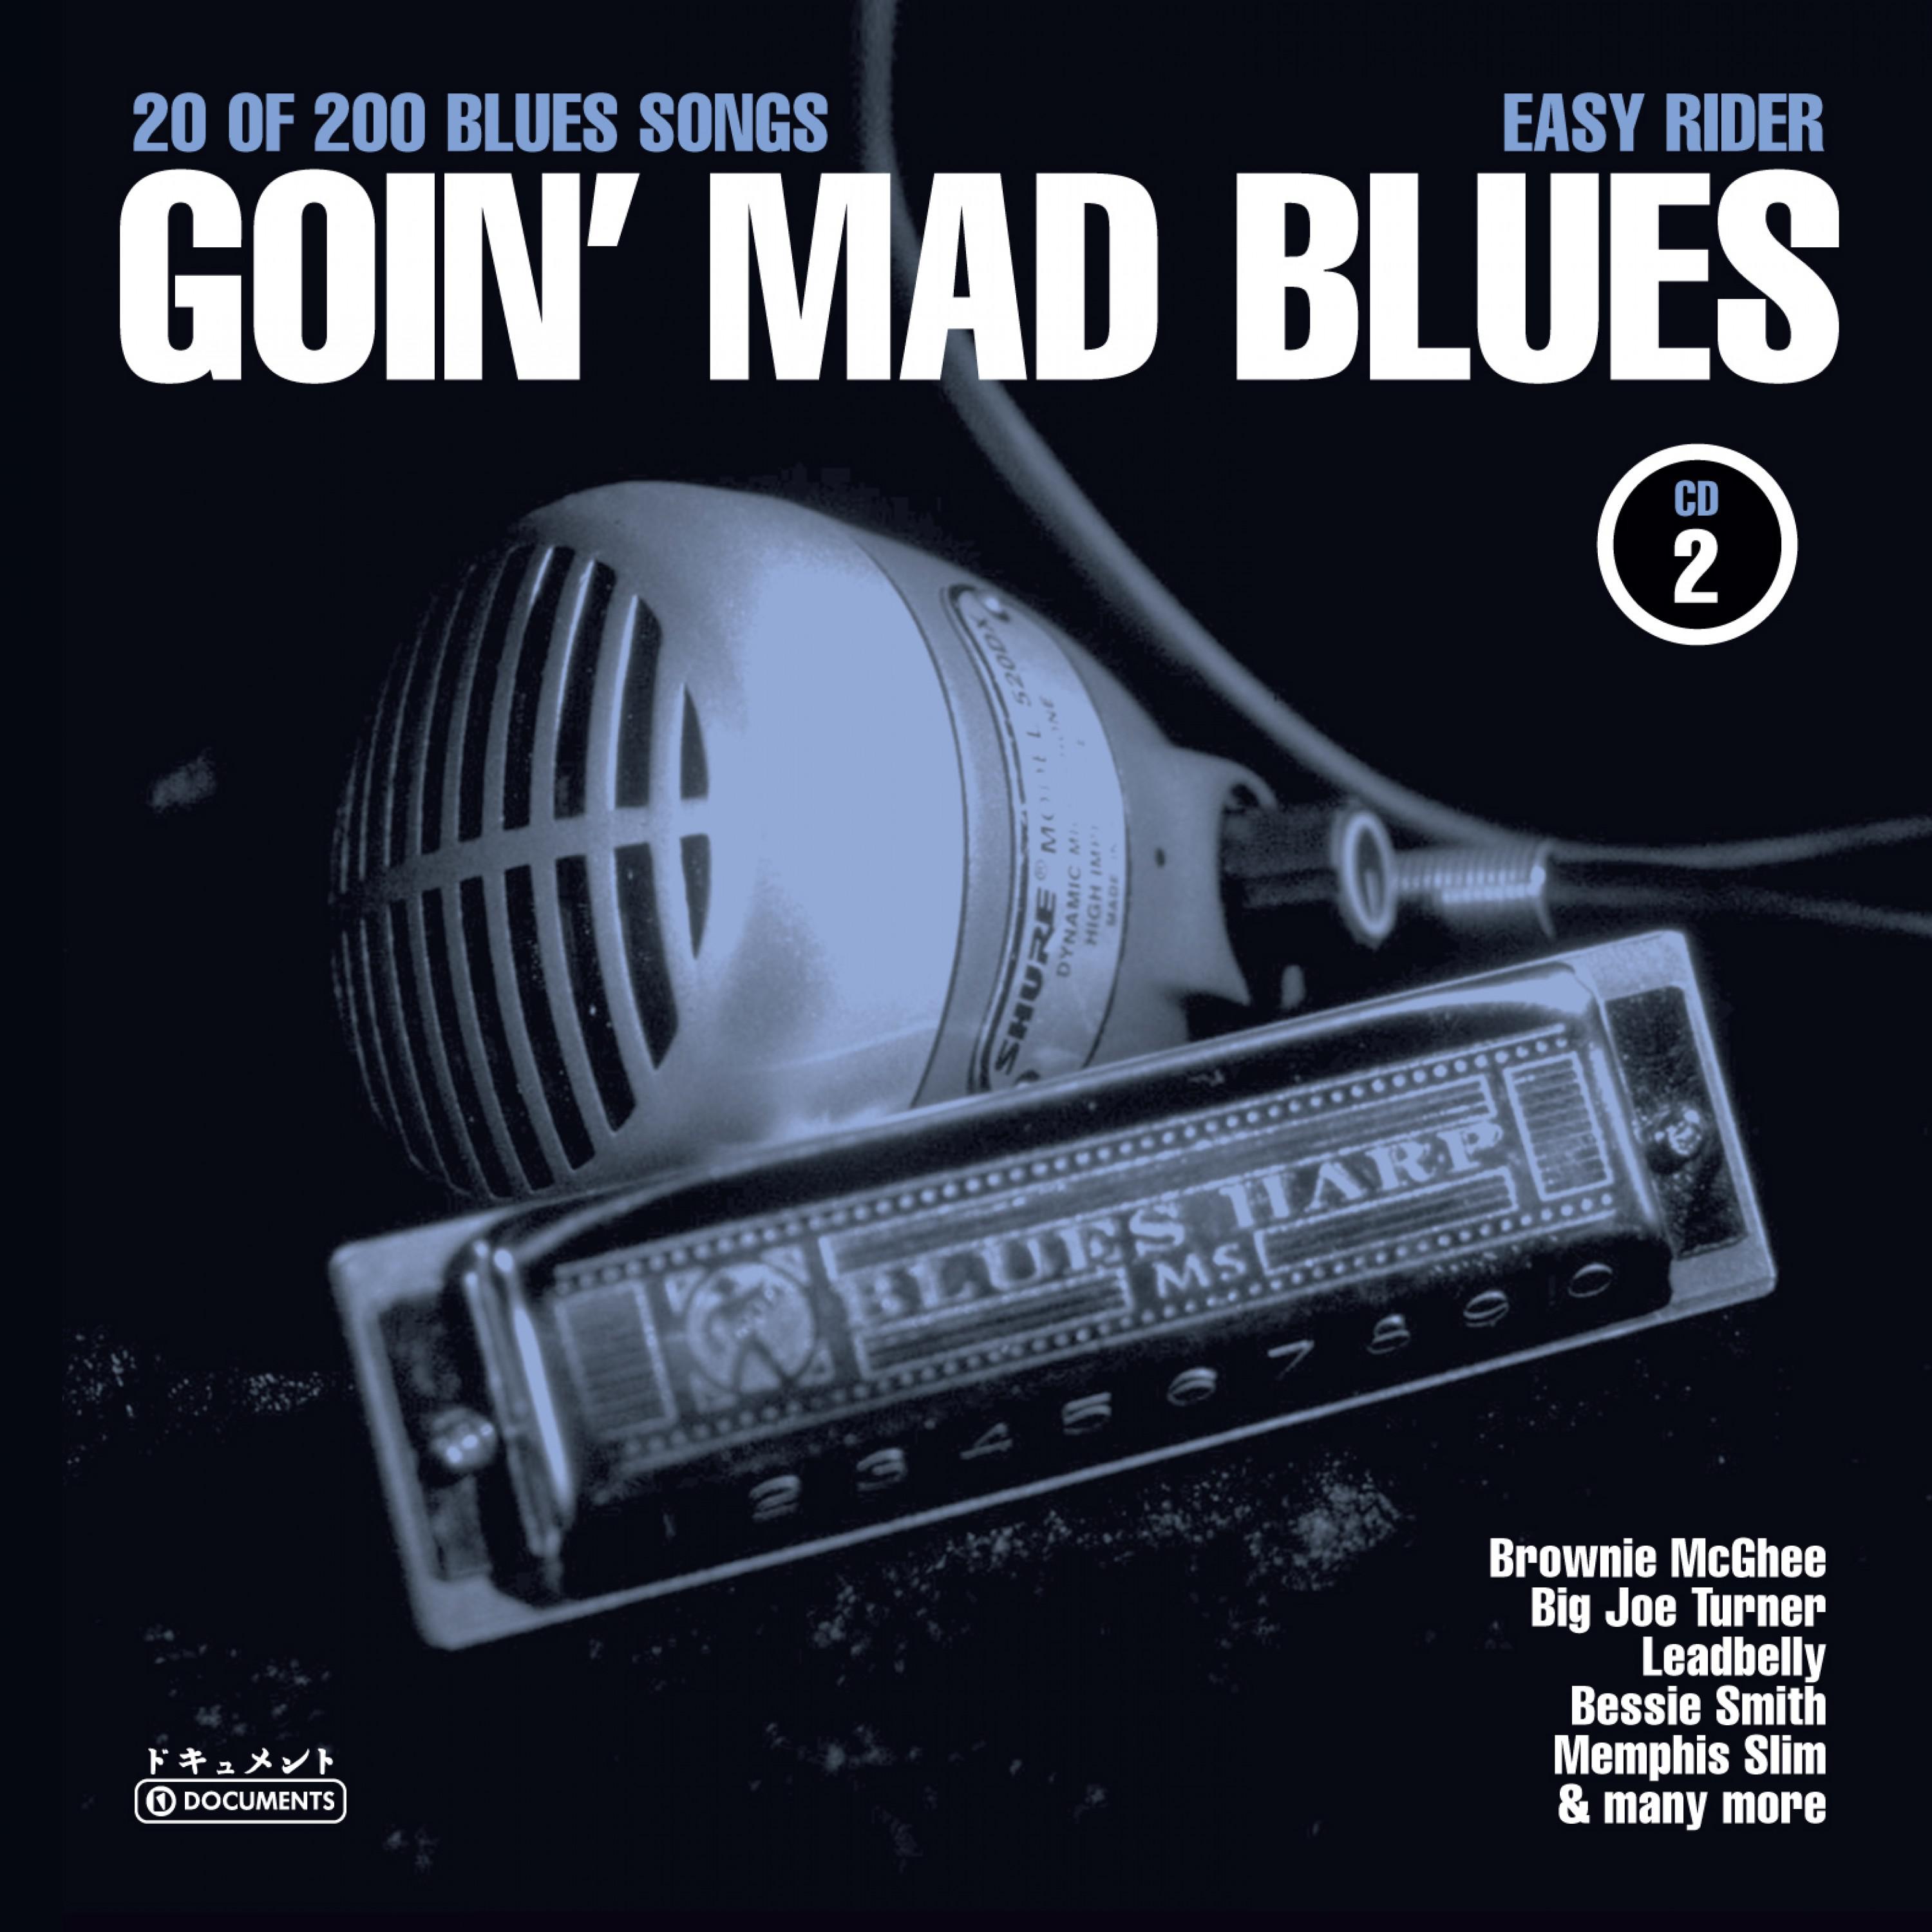 Goin' Mad Blues Vol. 2